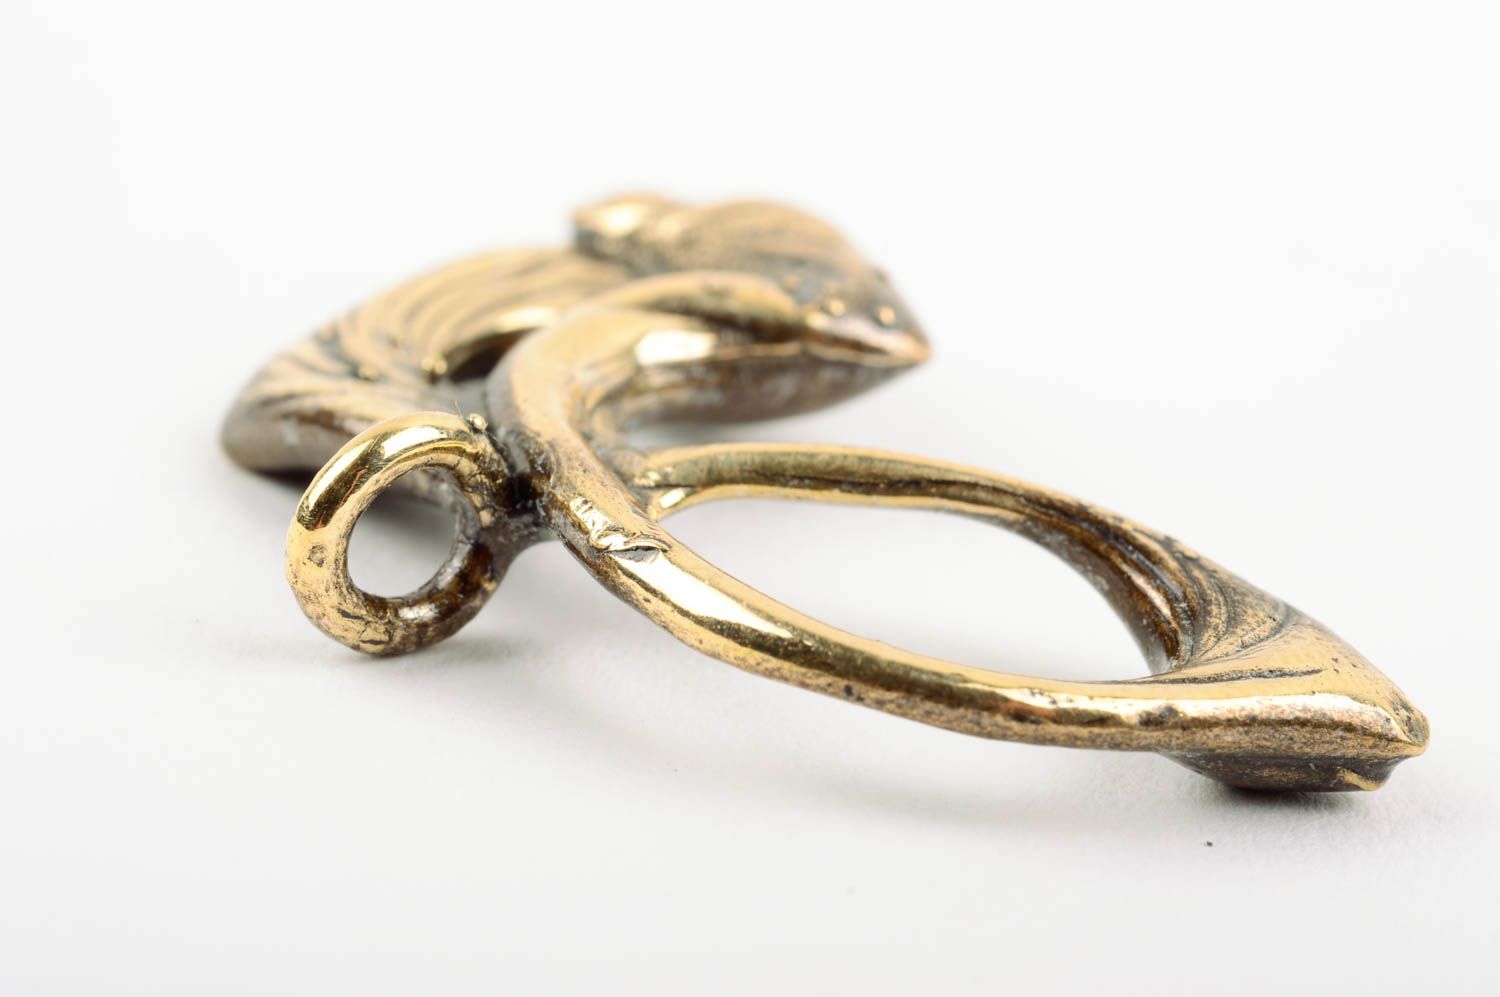 Stylish homemade brass pendant unusual metal pendant jewelry designs gift ideas photo 2